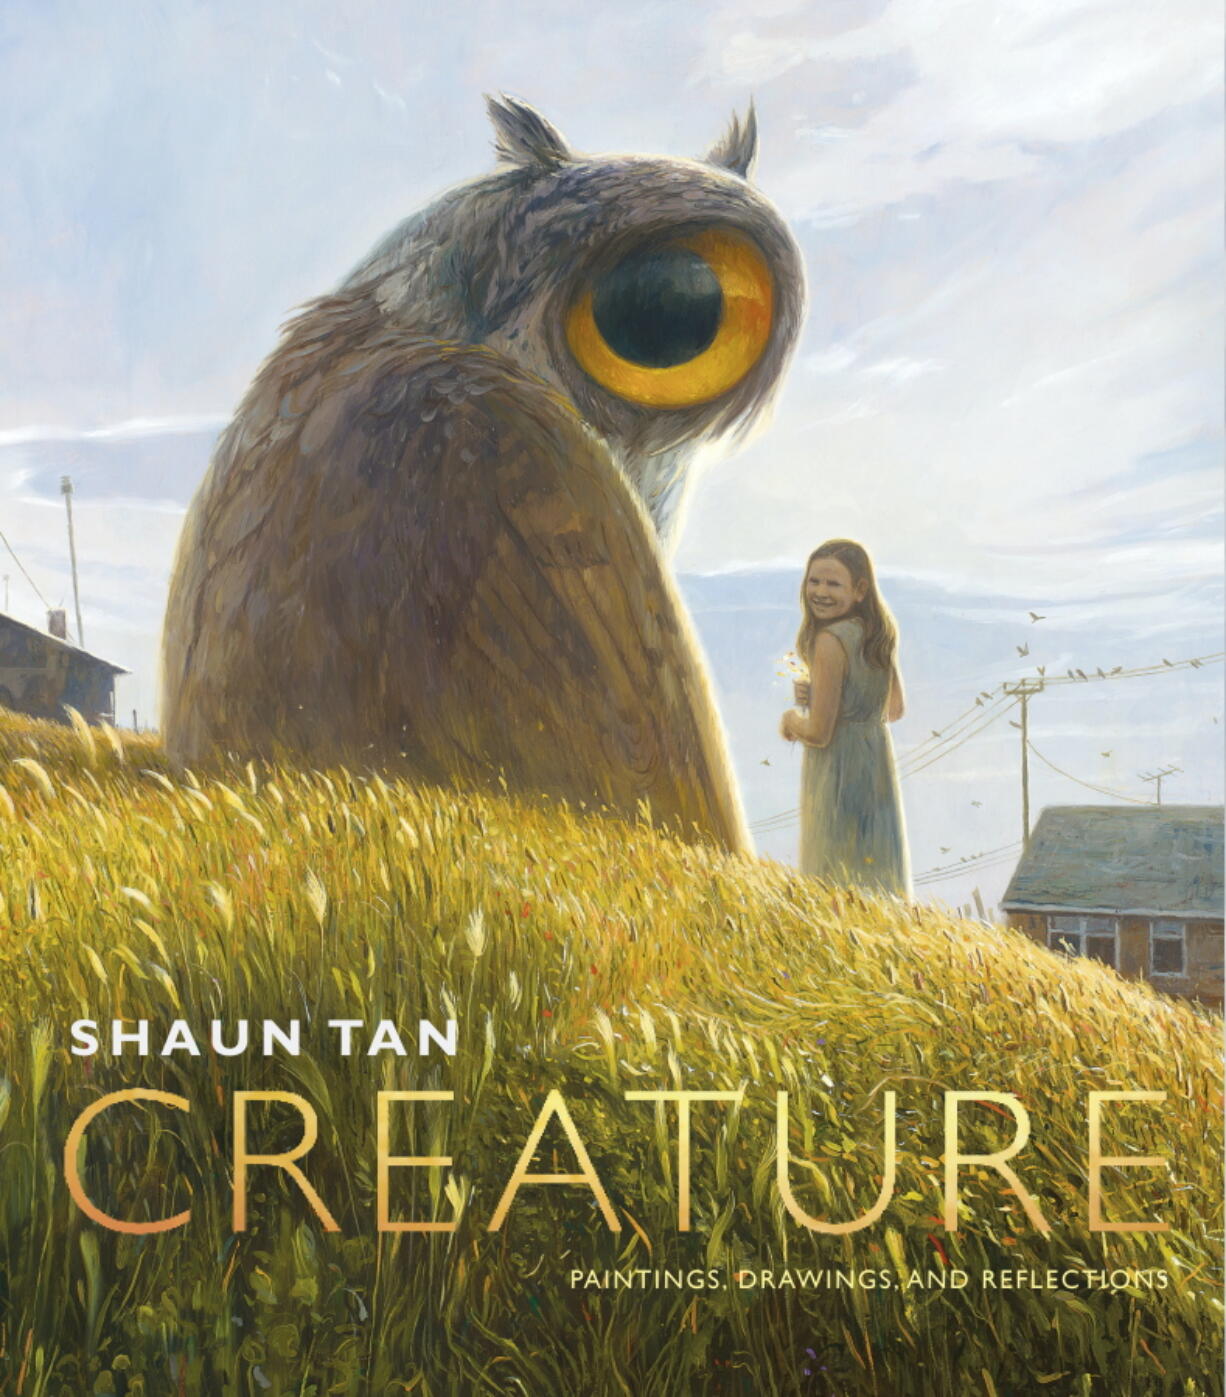 "Creature" by Shaun Tan.